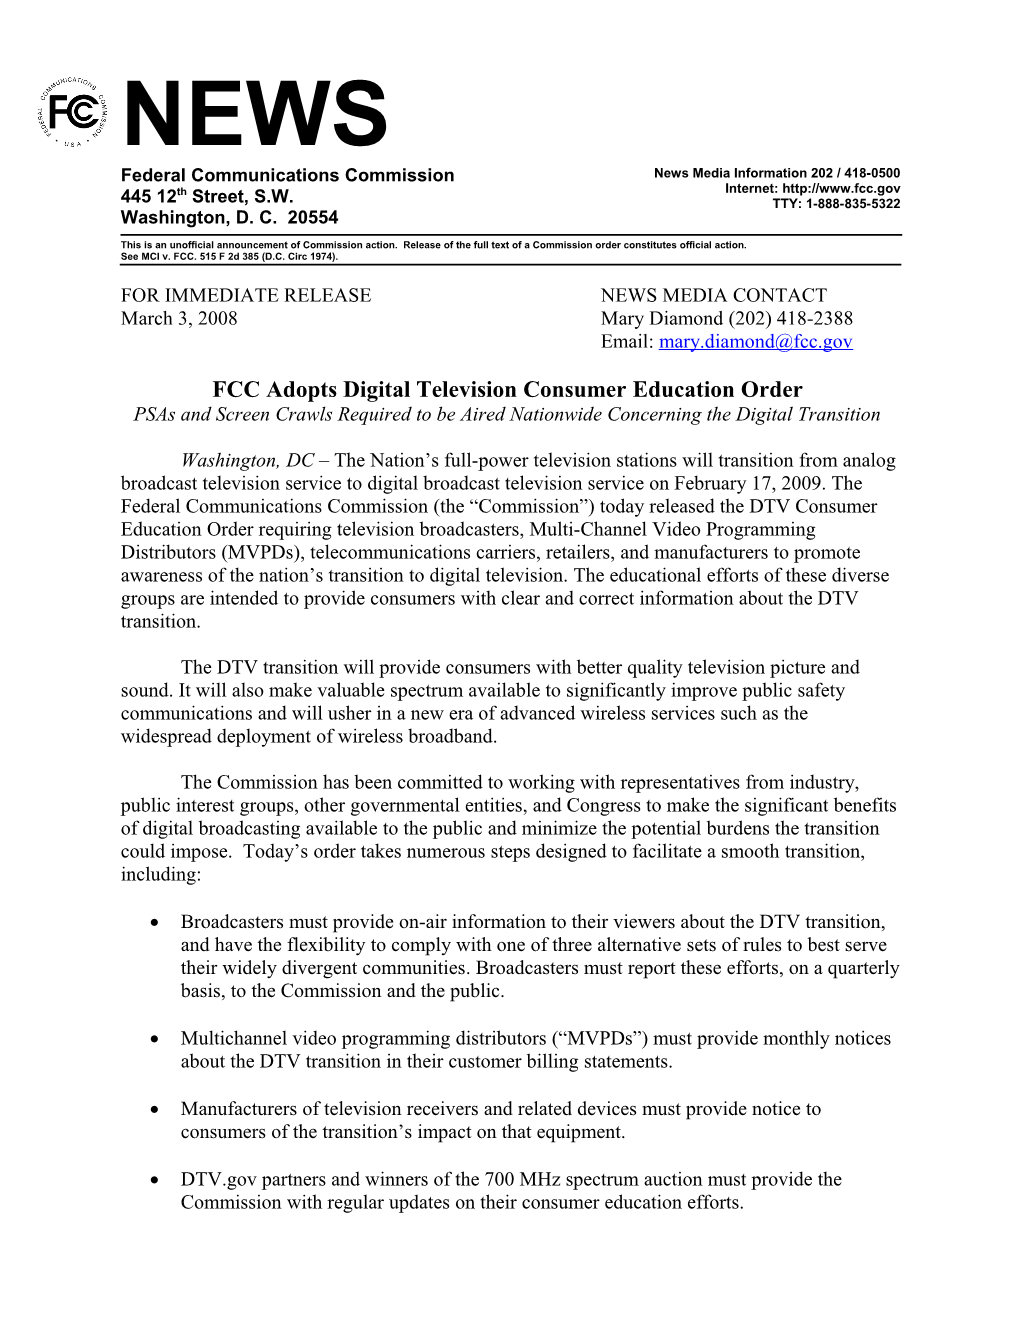 FCC Adopts Digital Television Consumer Education Order